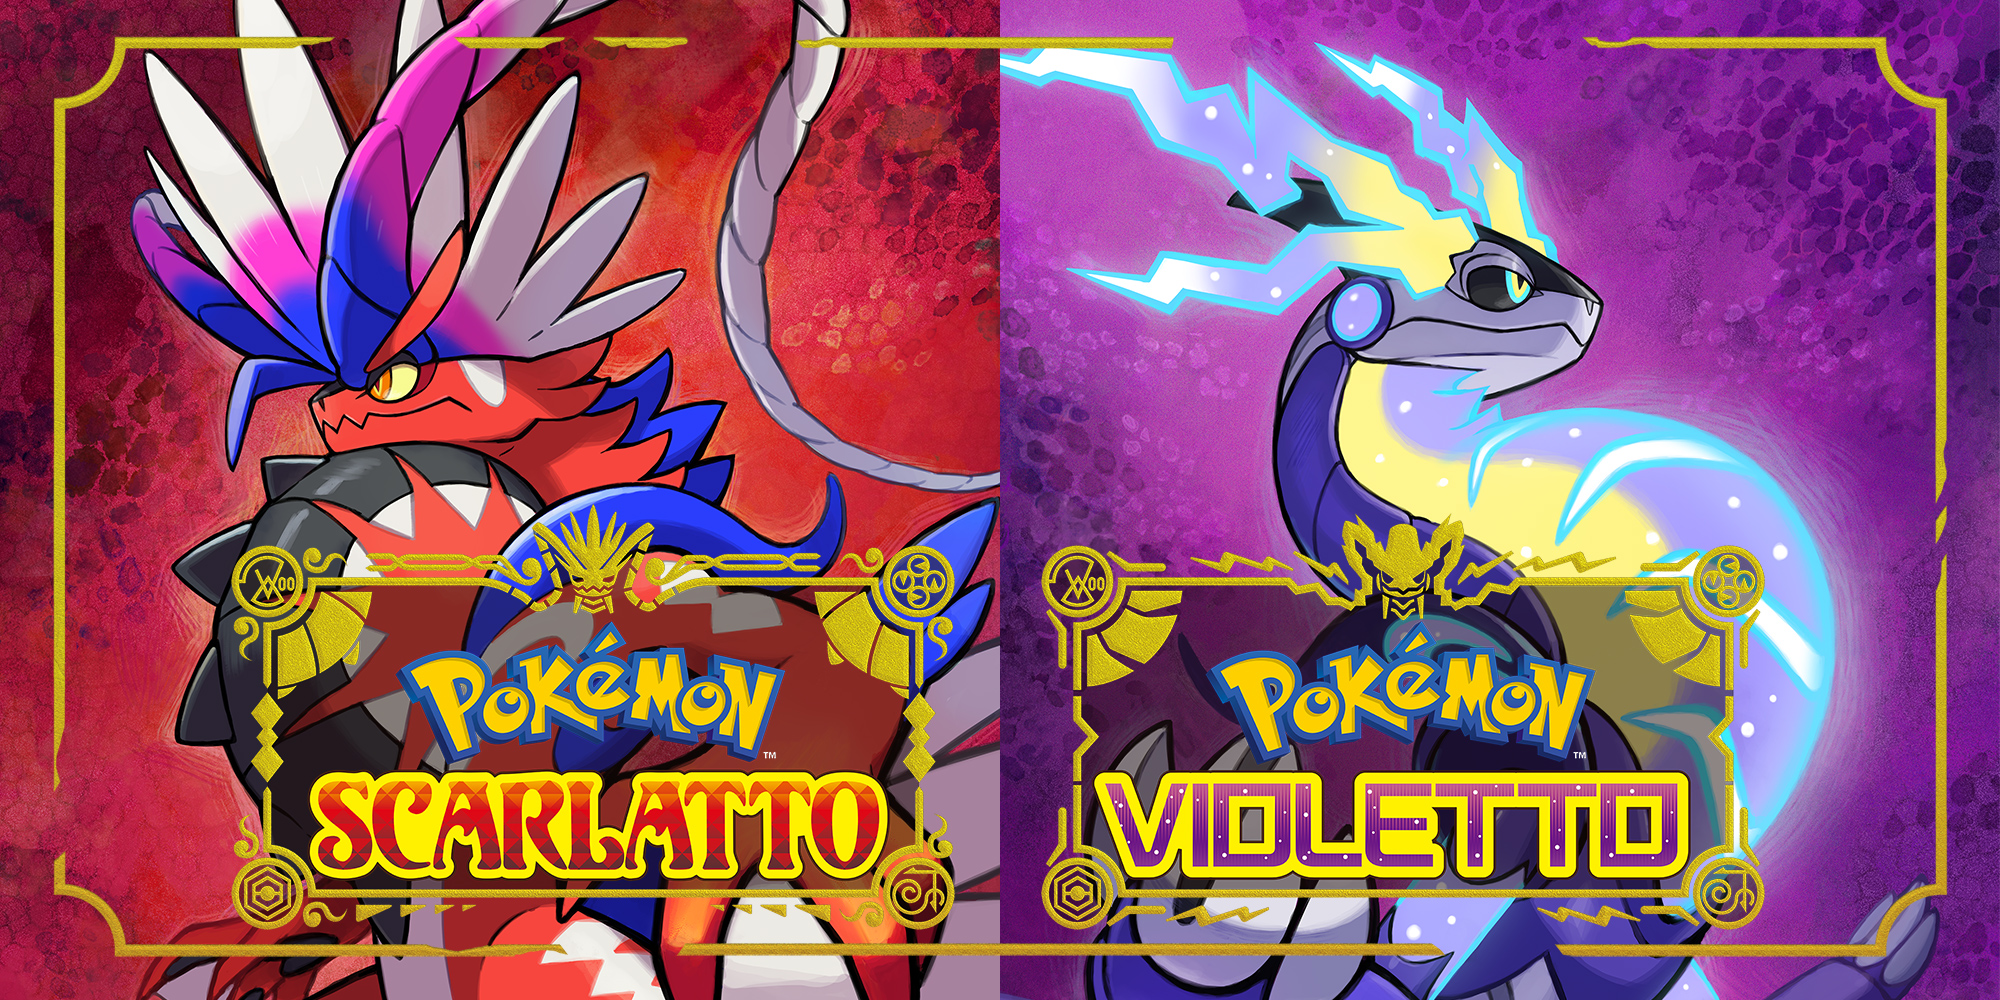 Pokémon Scarlatto & Pokémon Violetto | Nintendo